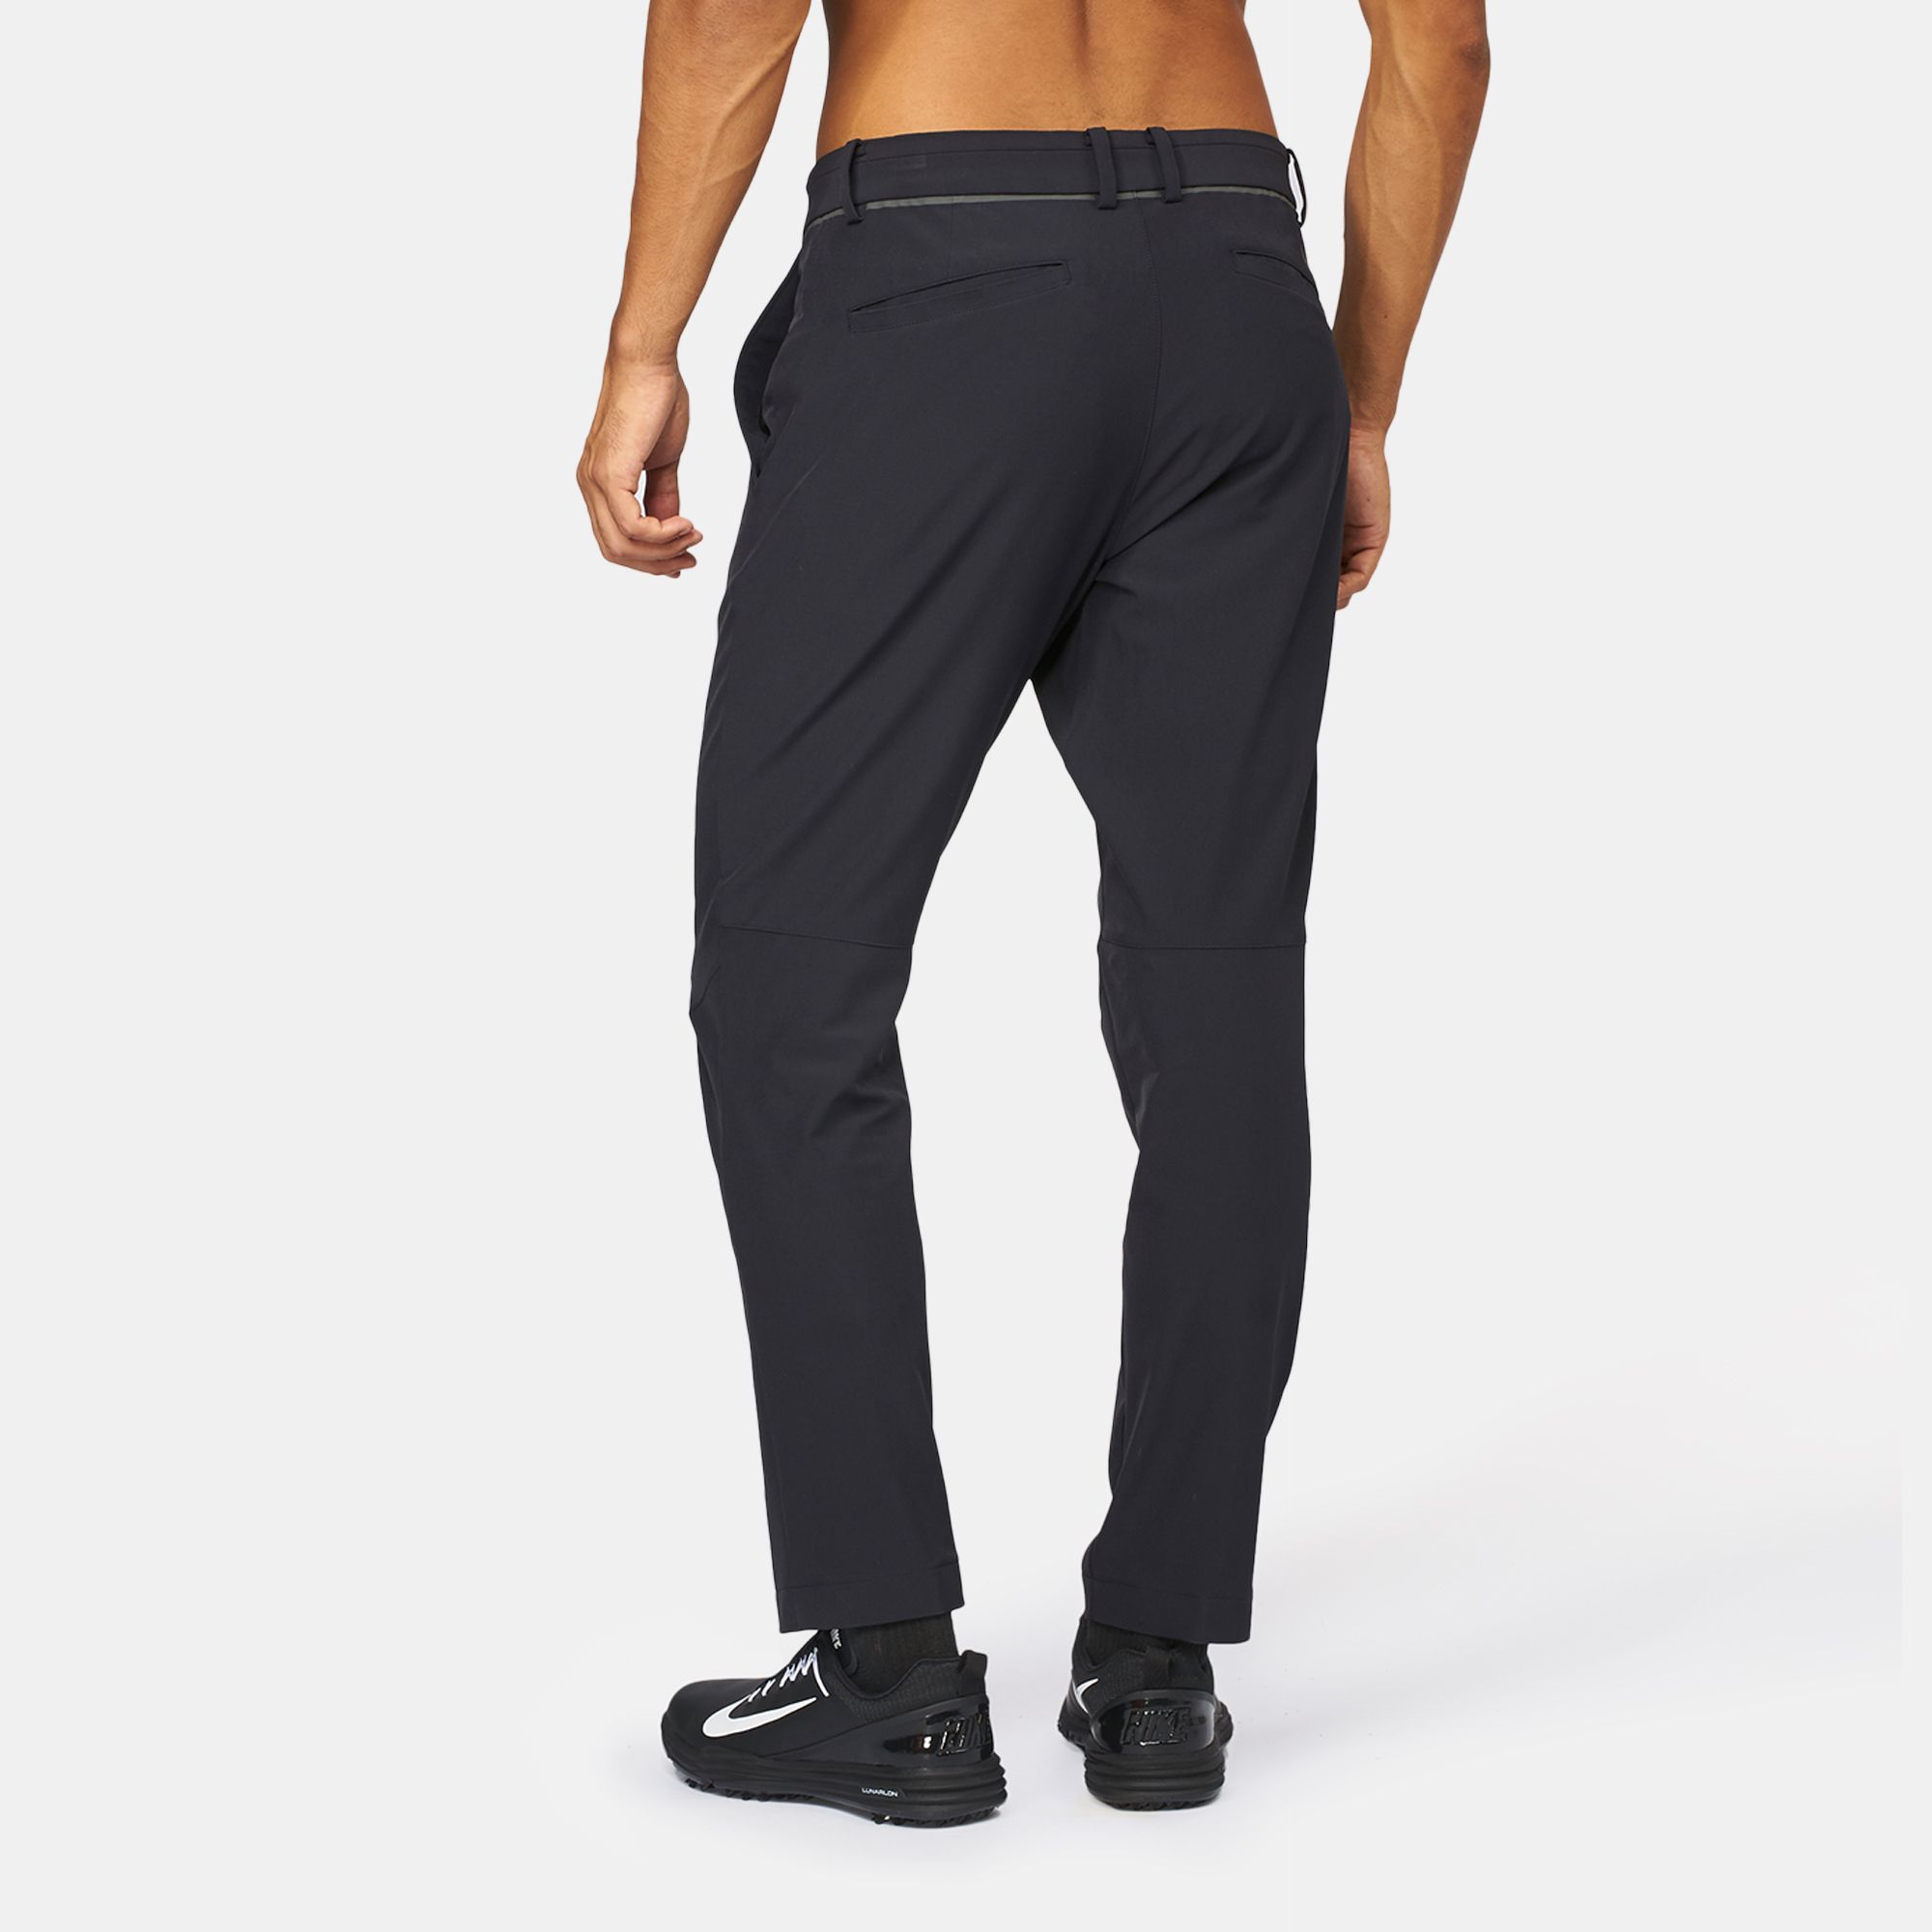 Shop Black Nike Golf Dynamic Woven Pants for Mens by Nike Golf | SSS